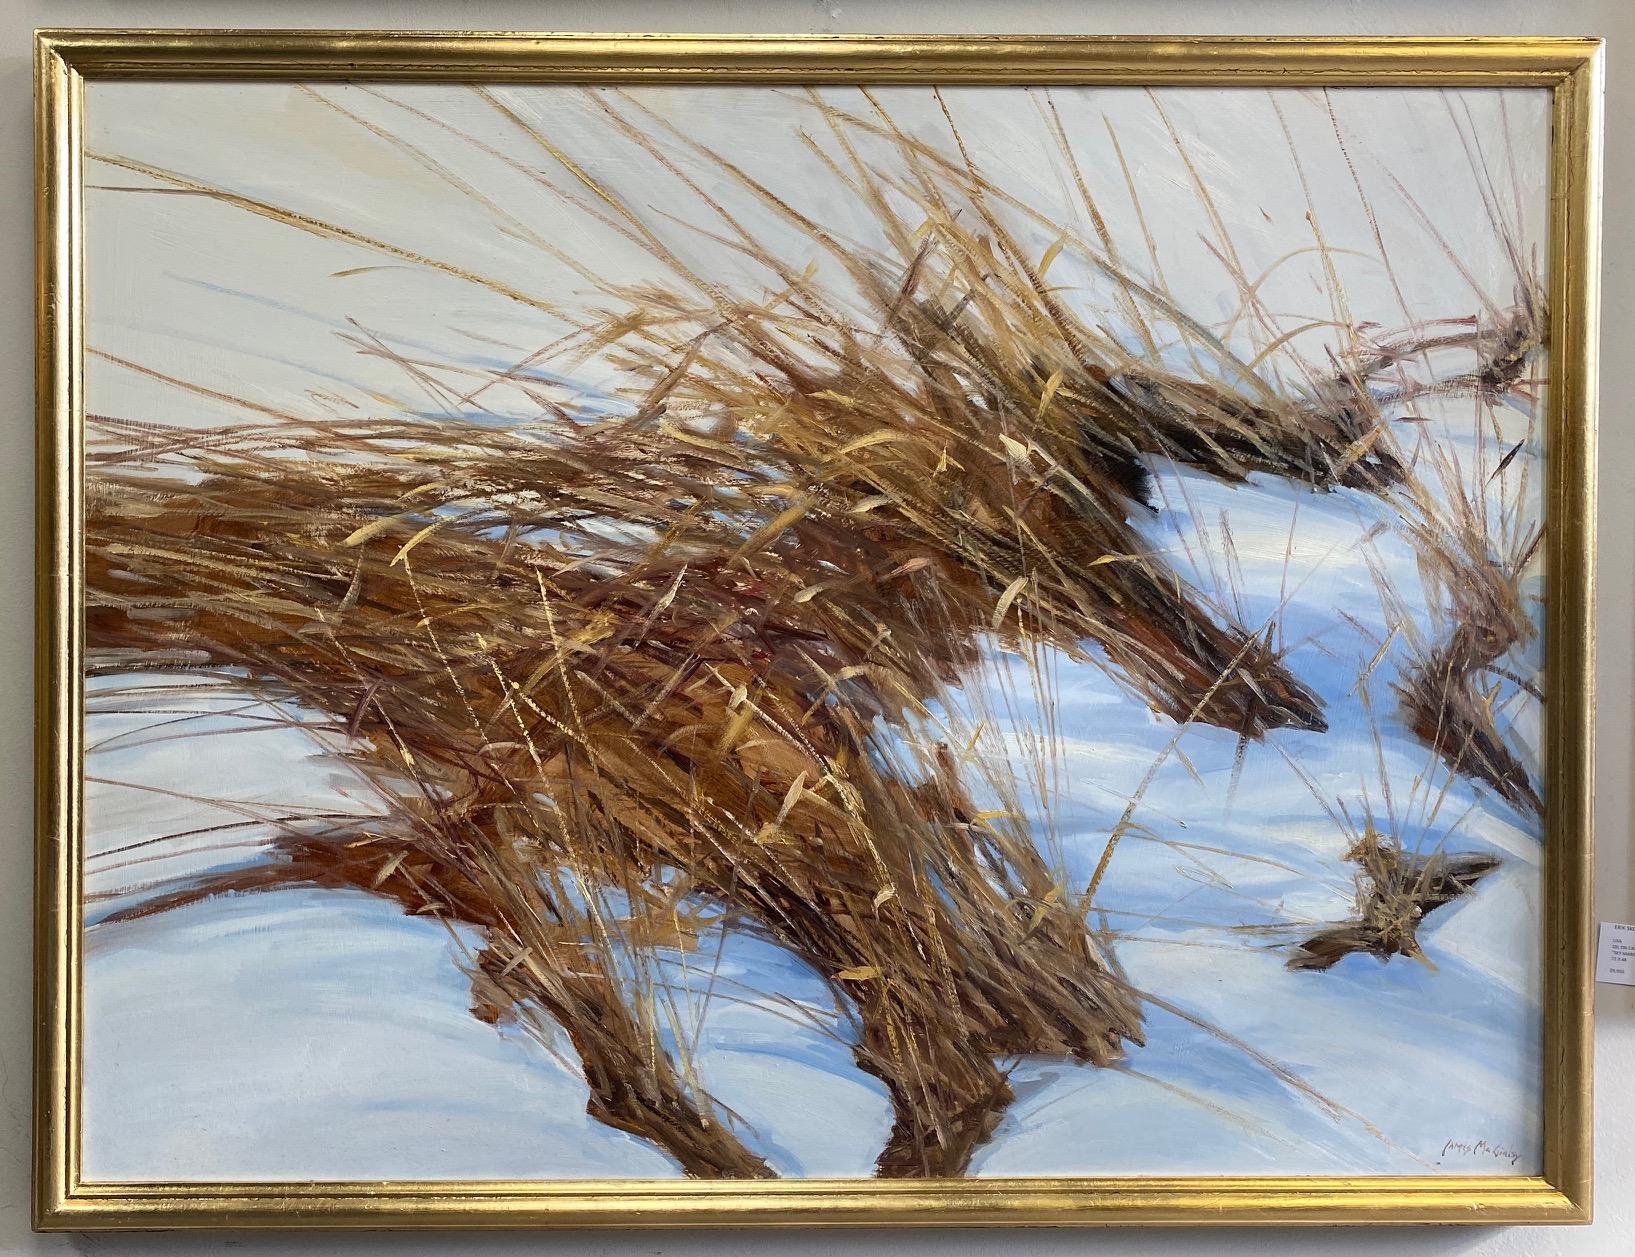 James McGinley Landscape Painting - Grain in Snow, original 36x48 contemporary landscape